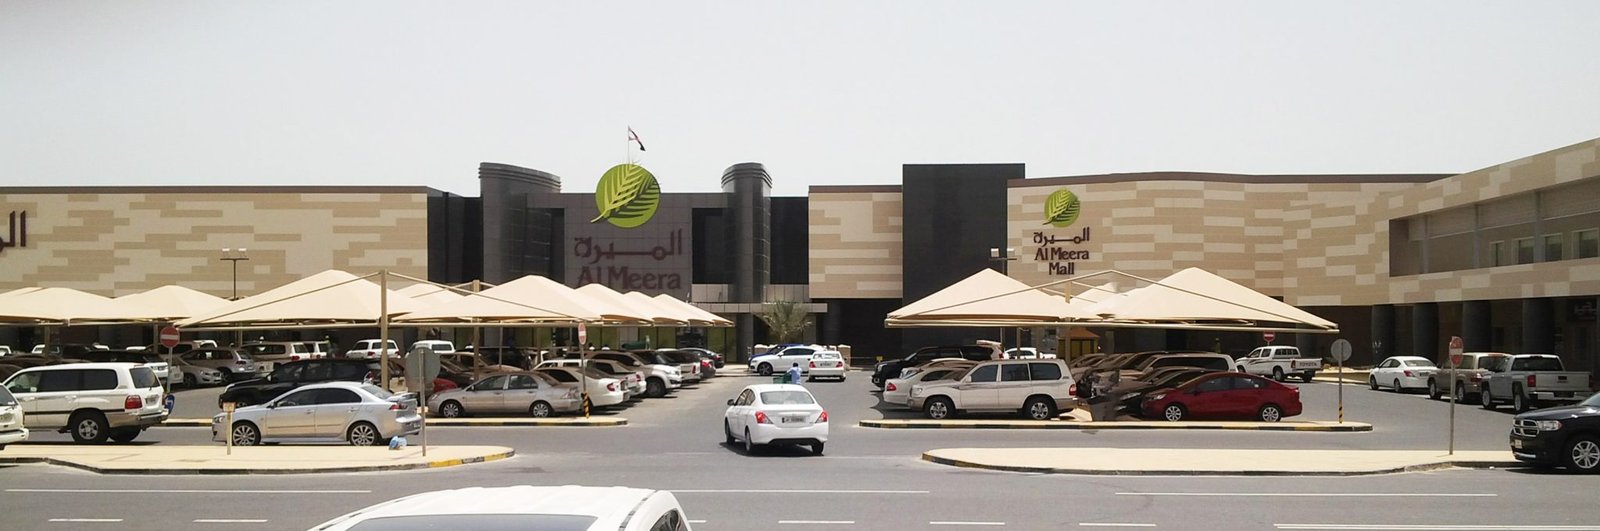 Al Meera Supermarket